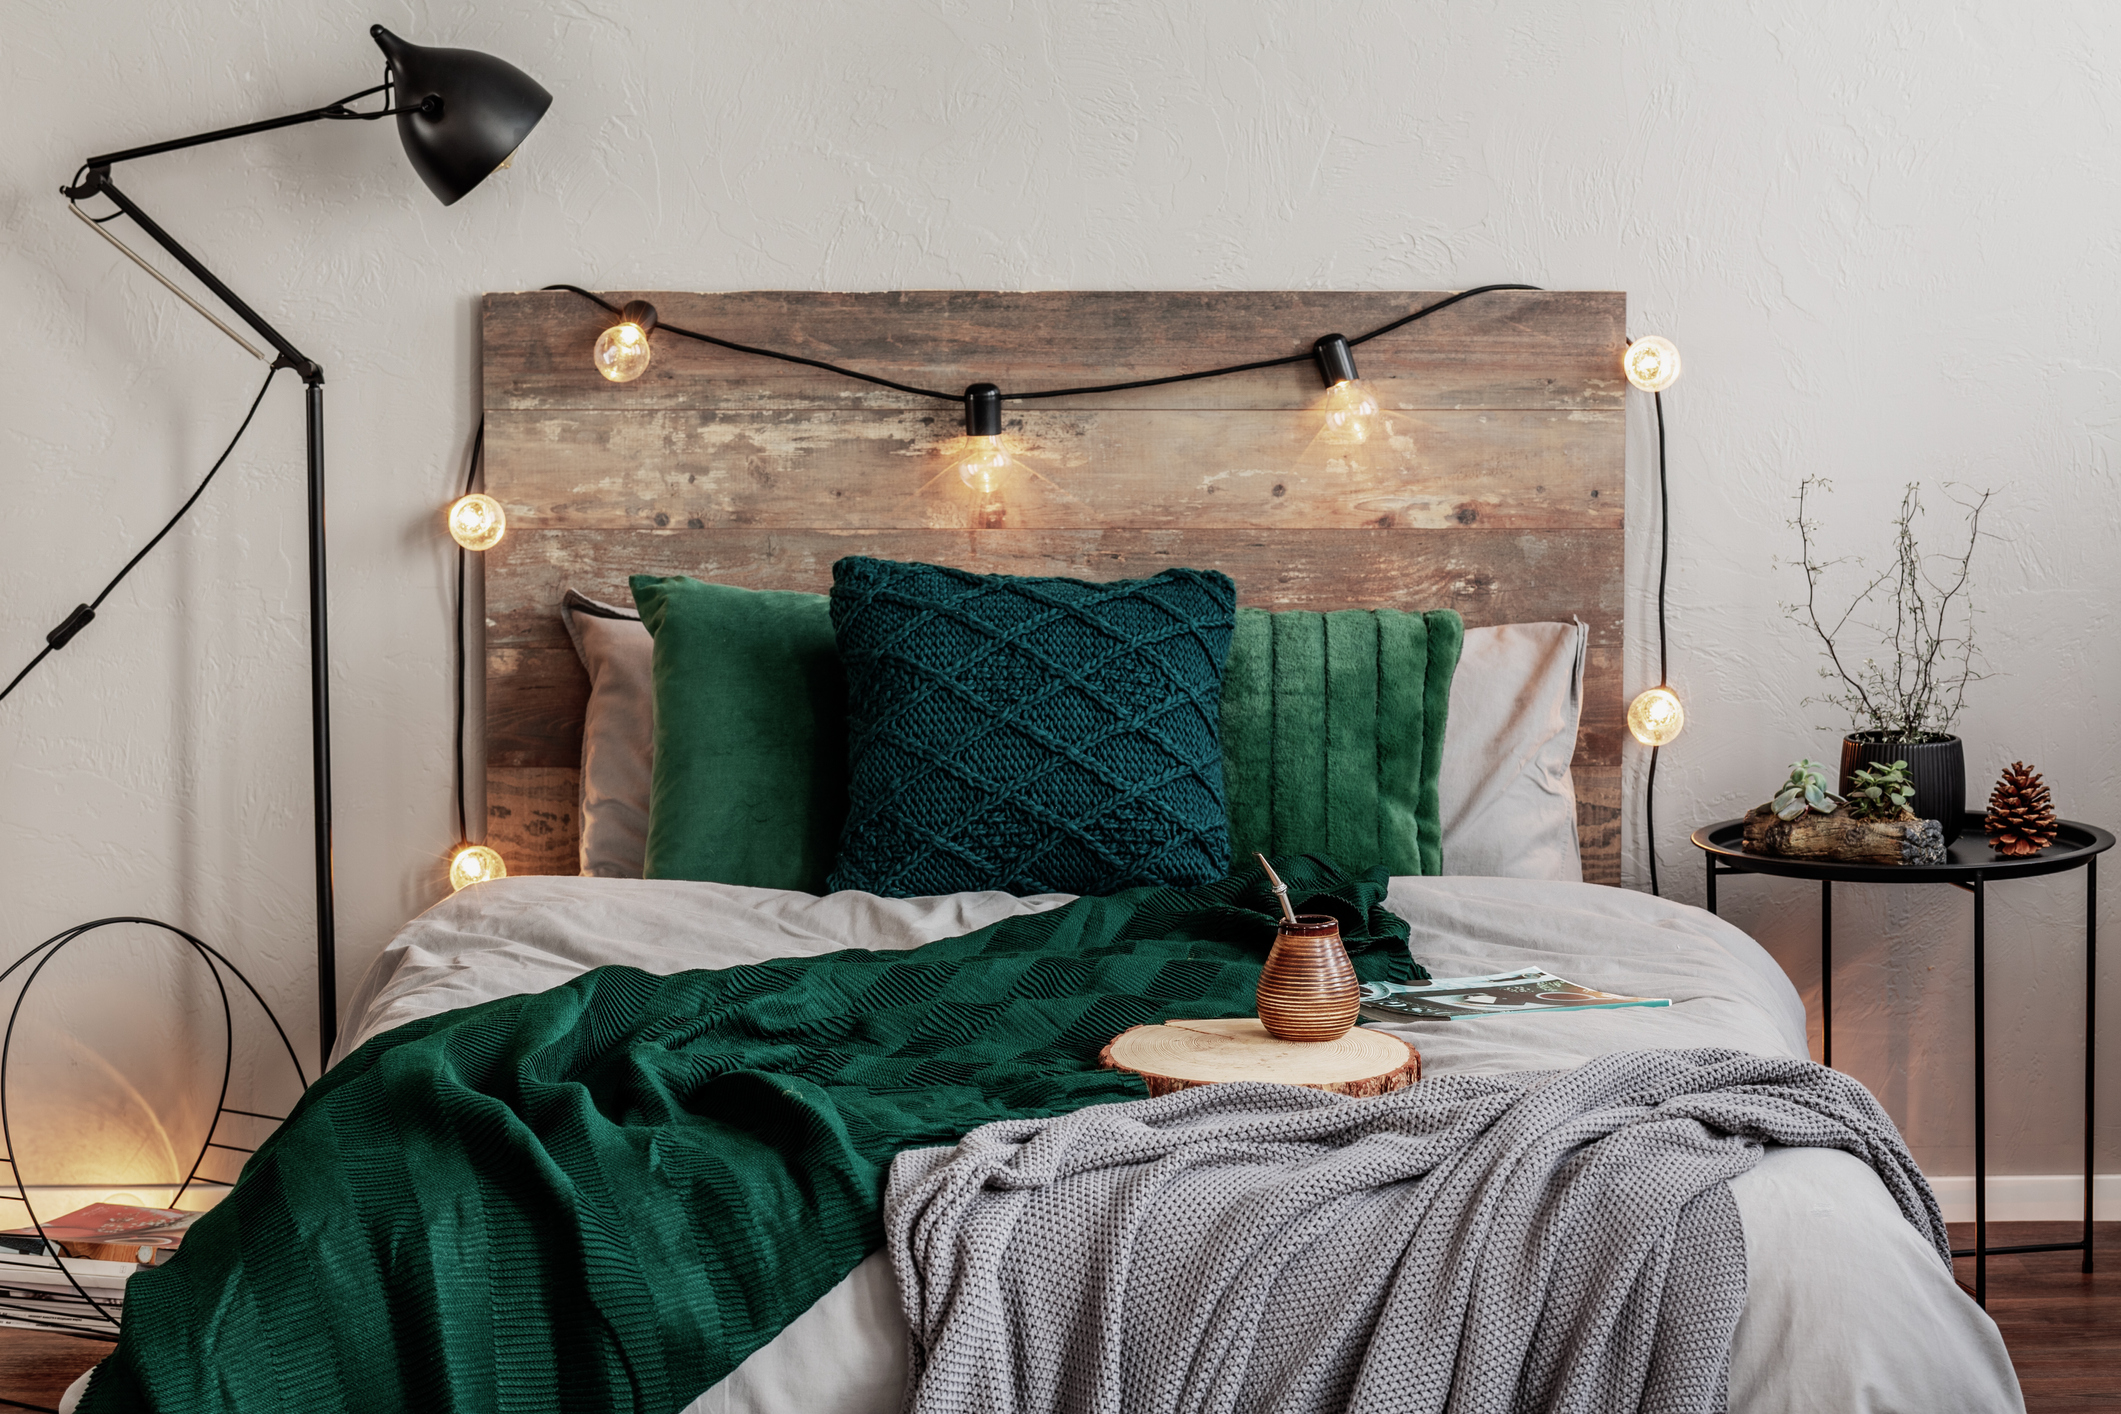 green bedding and wooden headboard in bedroom